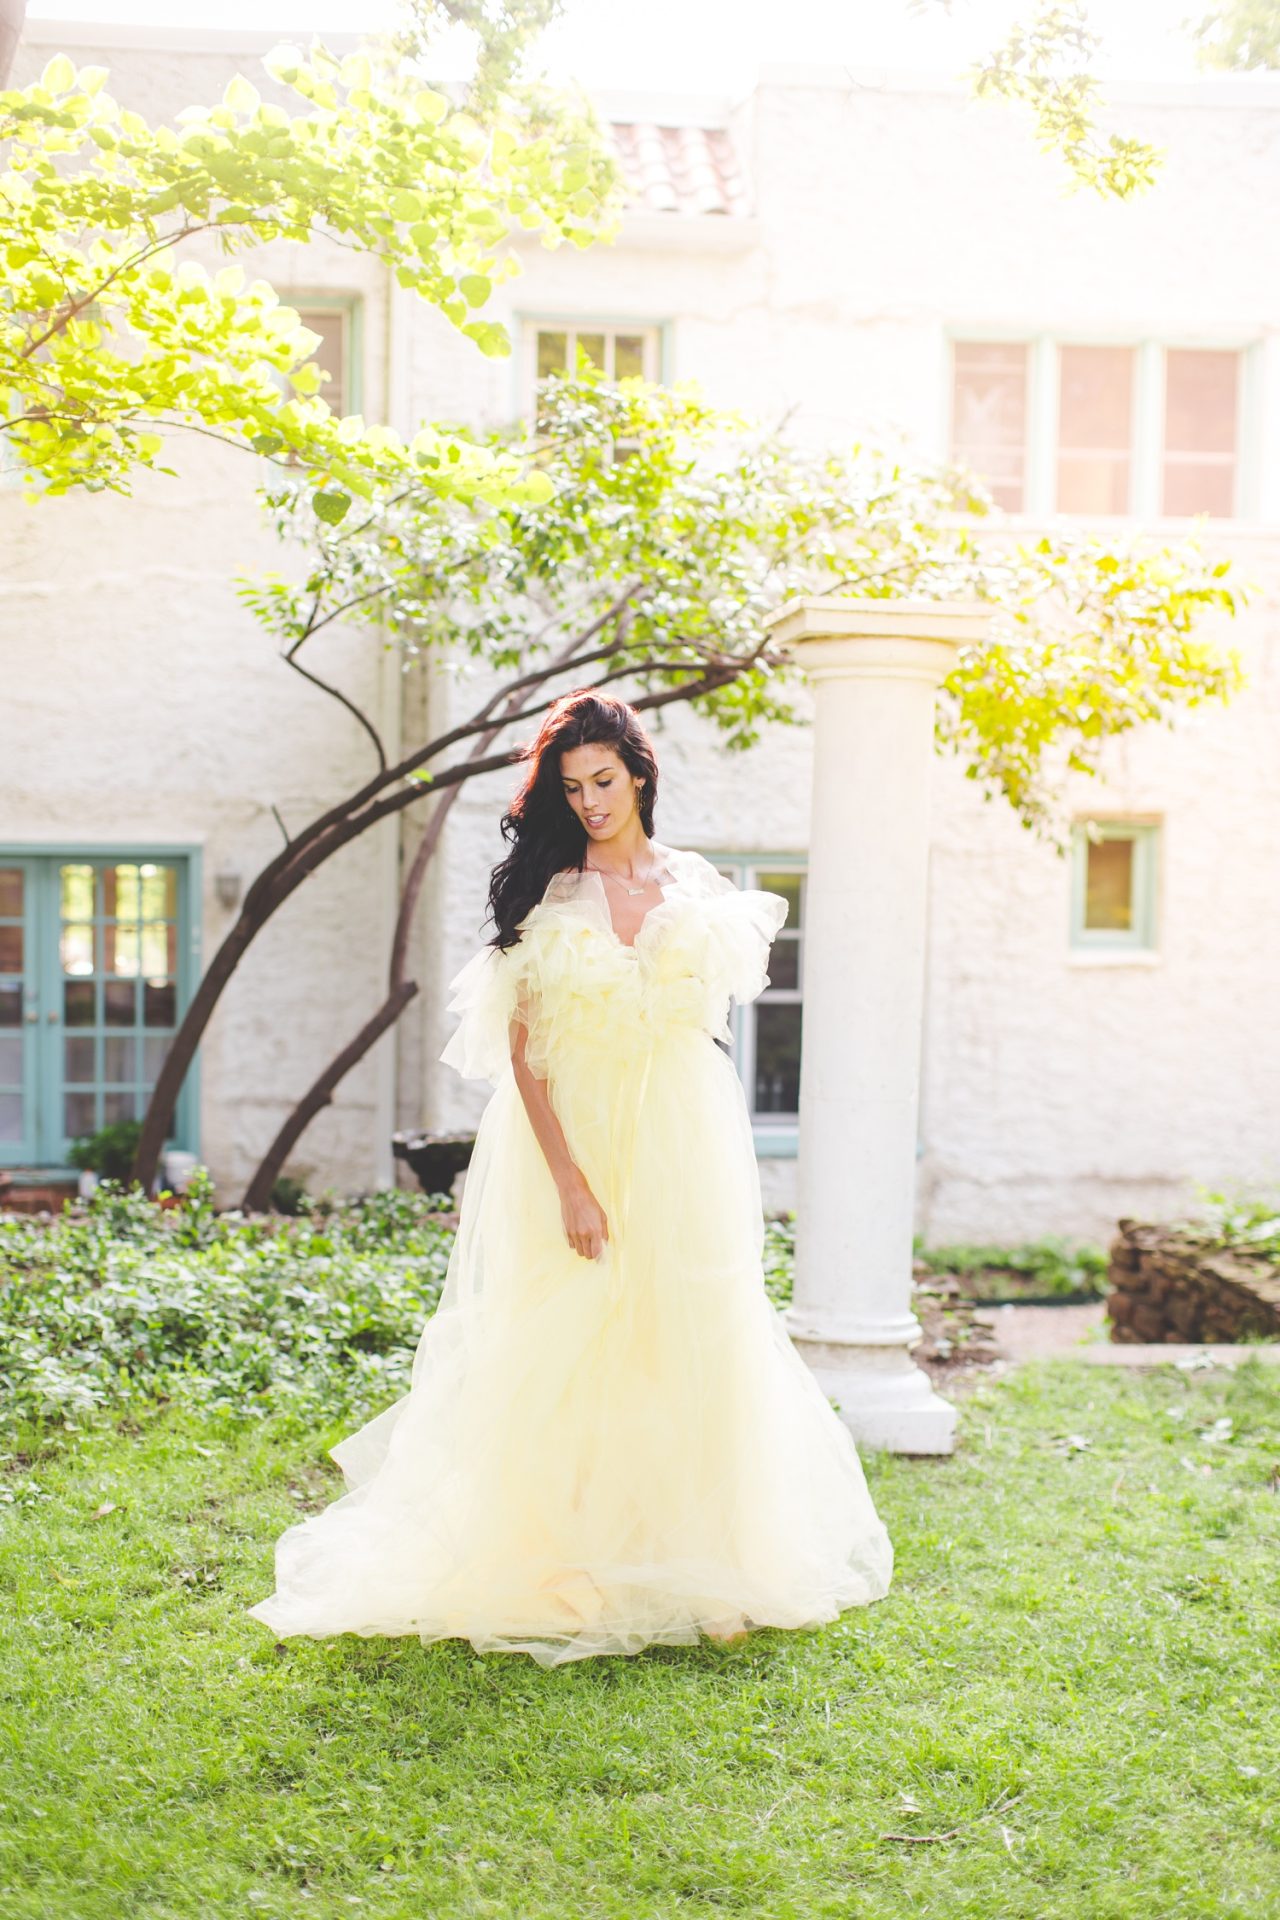 Editorial Wedding Photography of Model in Huge Yellow Tulle Dress, Fayetteville Arkansas Wedding Photographer Lissa Chandler